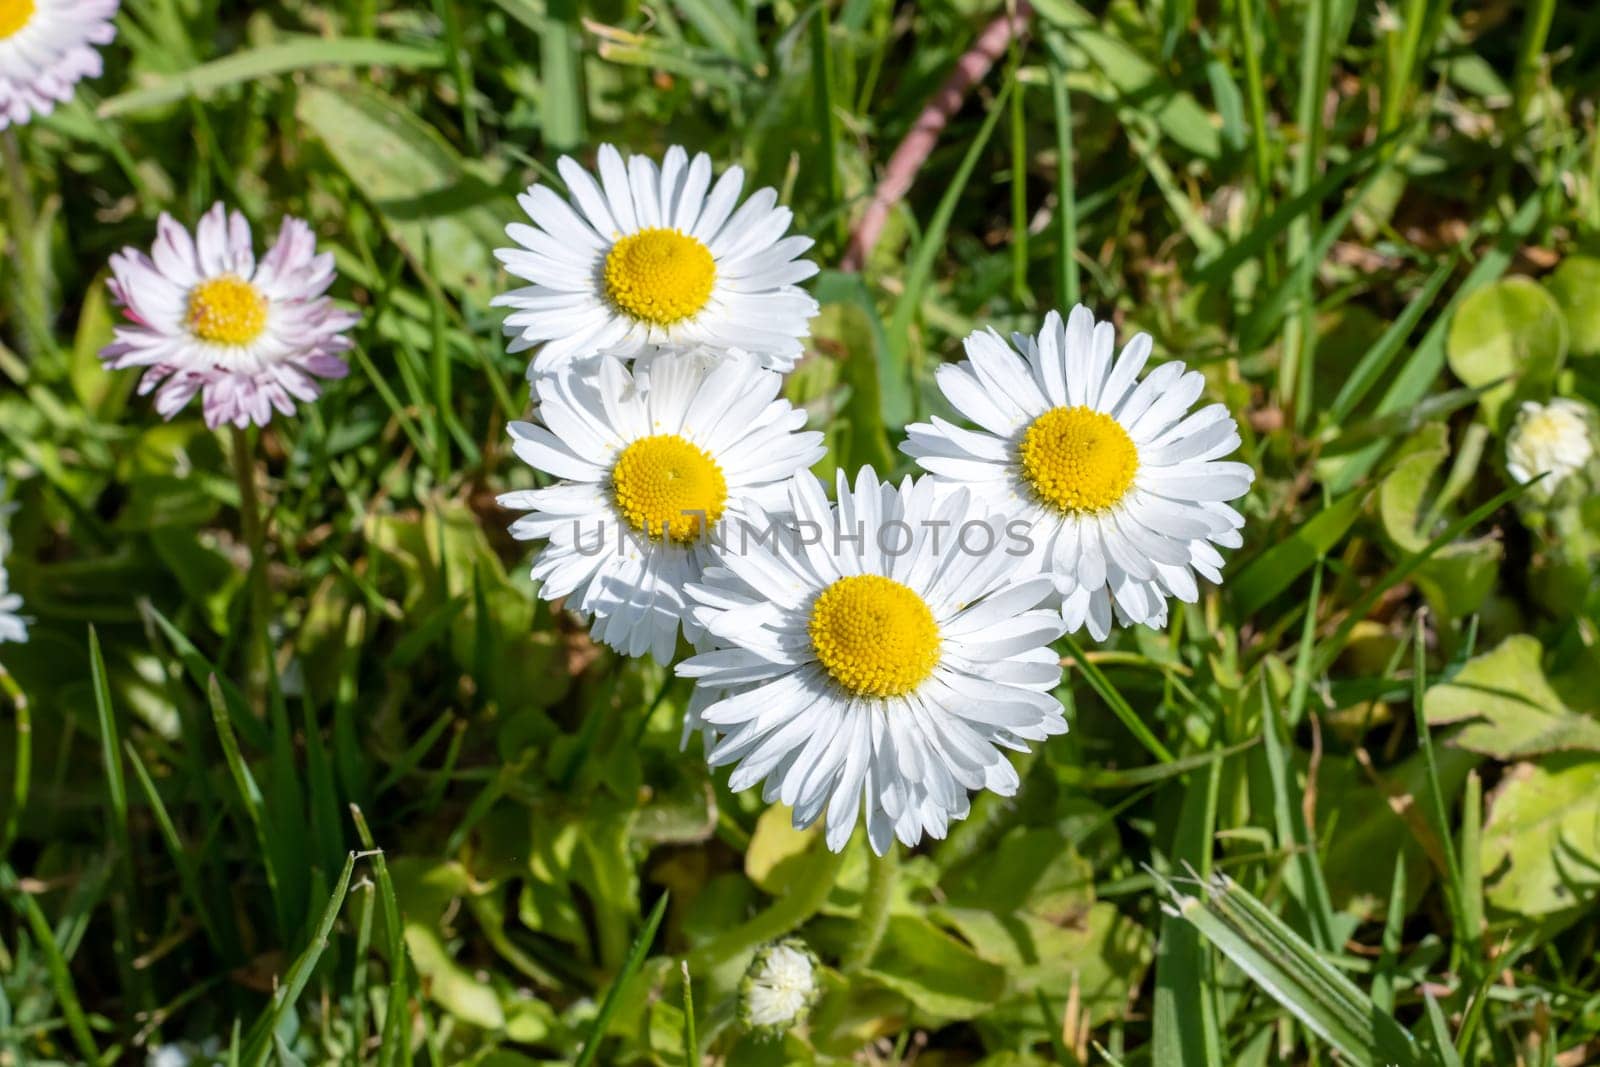 Small daisy flowers among green grass closeup by Vera1703